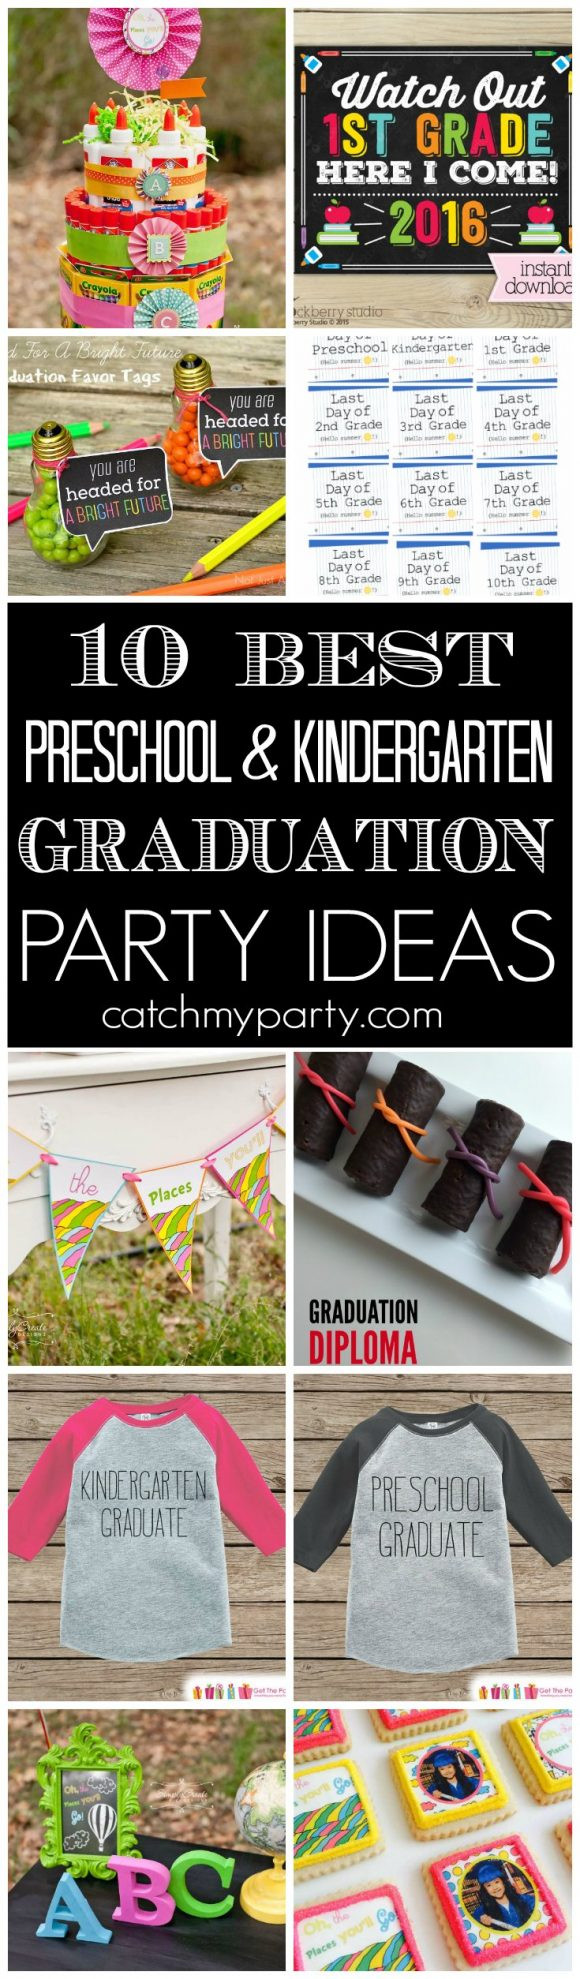 Kindergarten Graduation Party Ideas
 10 Best Preschool & Kindergarten Graduation Party Ideas